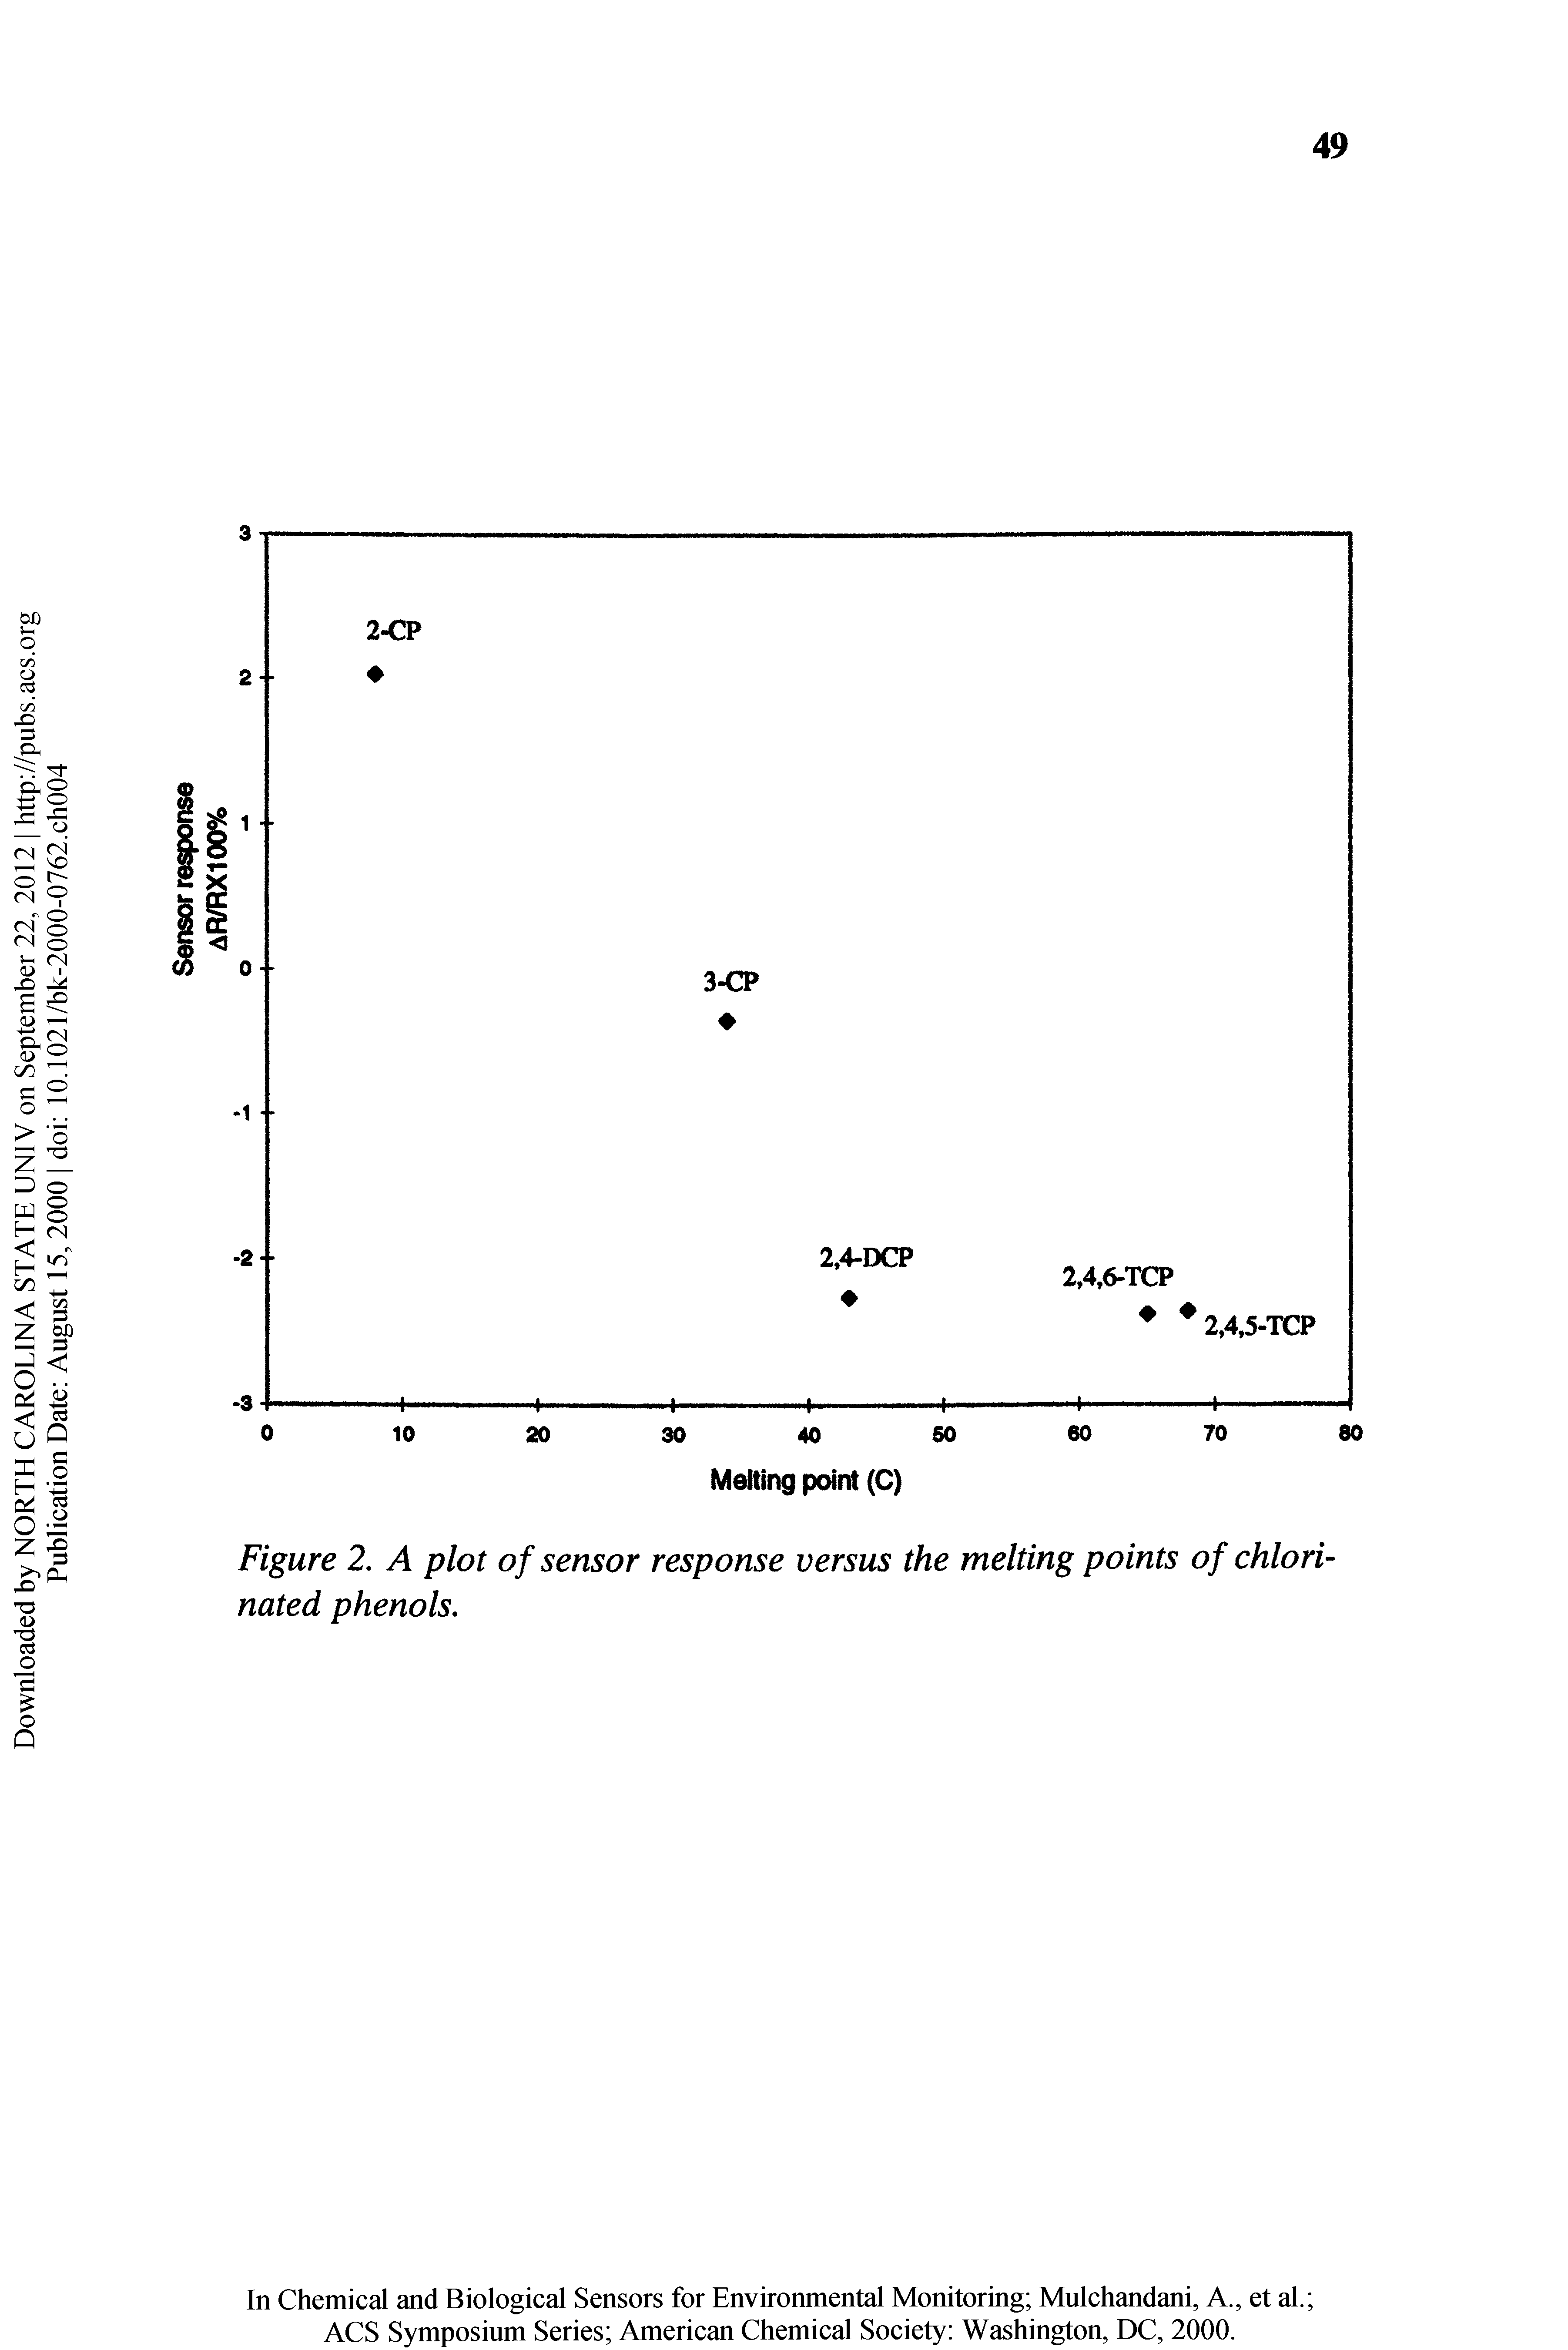 Figure 2. A plot of sensor response versus the melting points of chlorinated phenols.